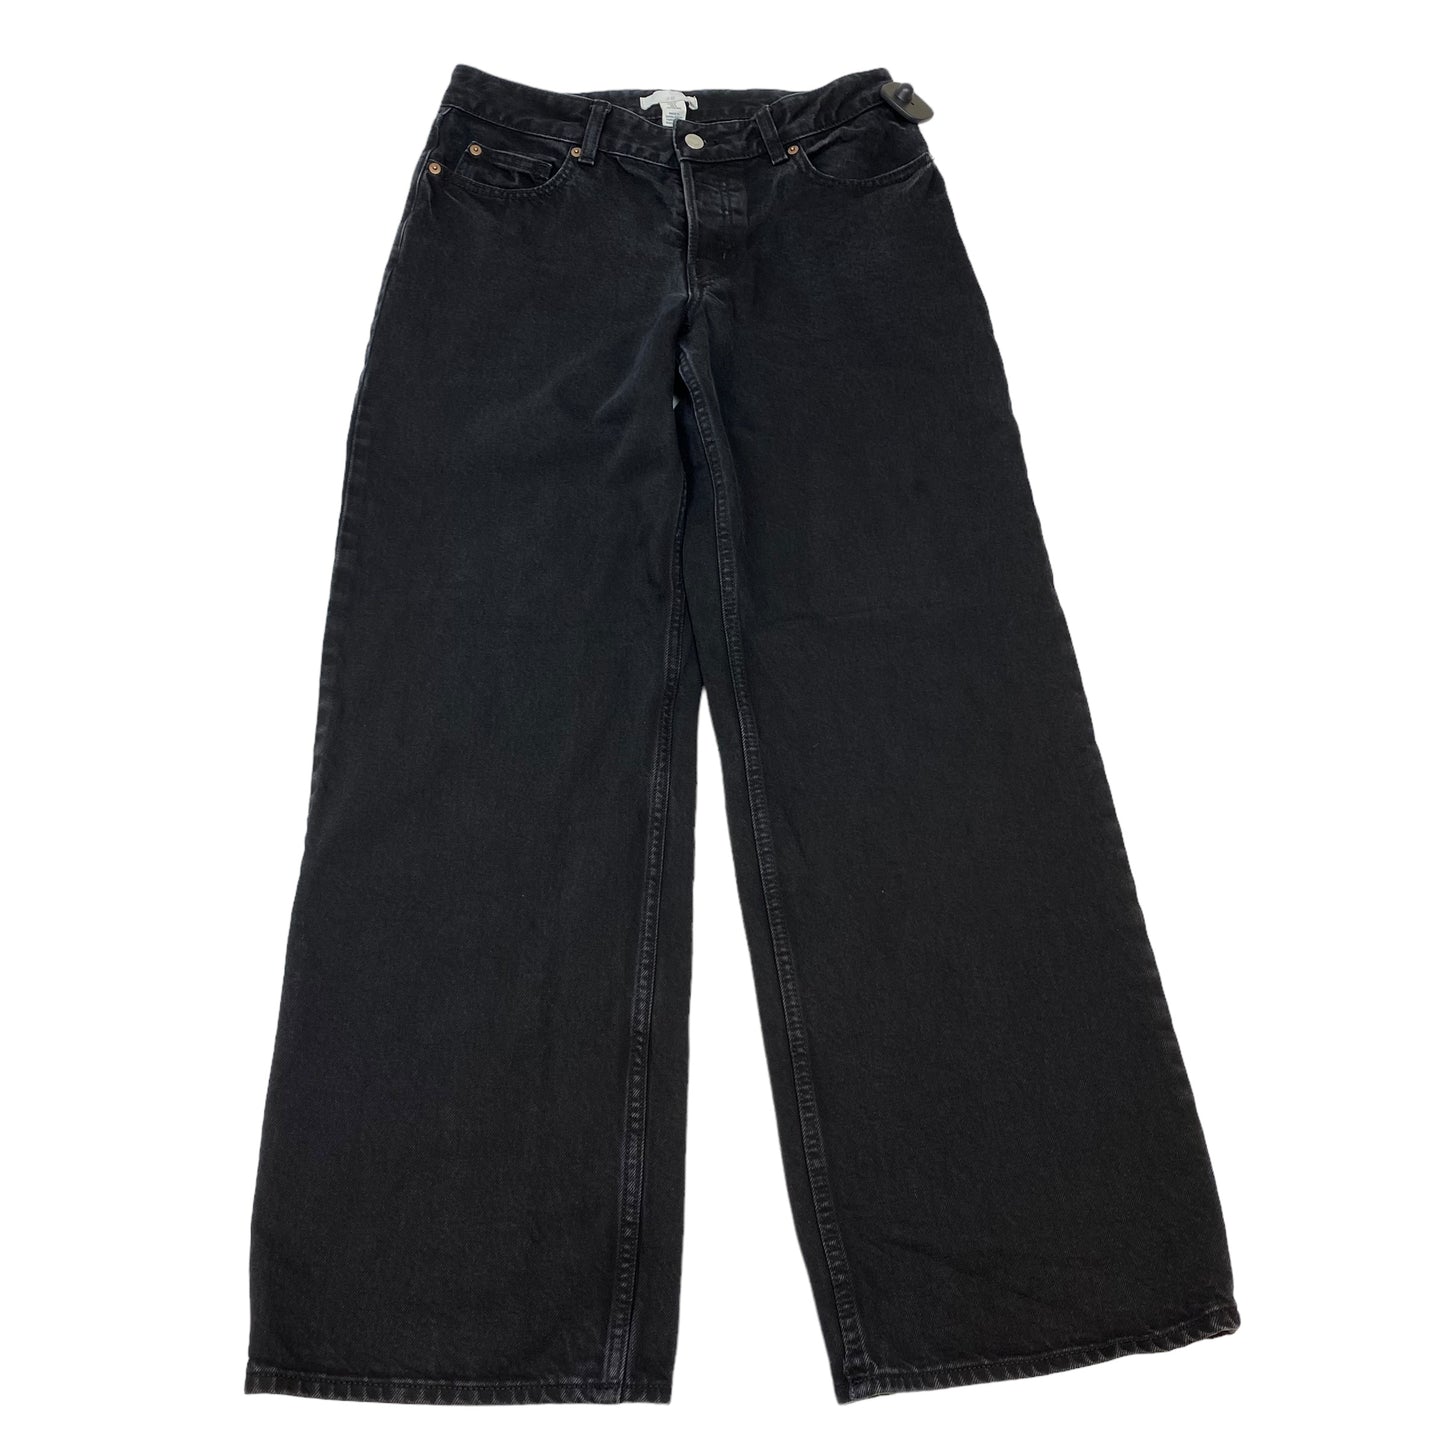 Black Denim Jeans Straight H&m, Size 8